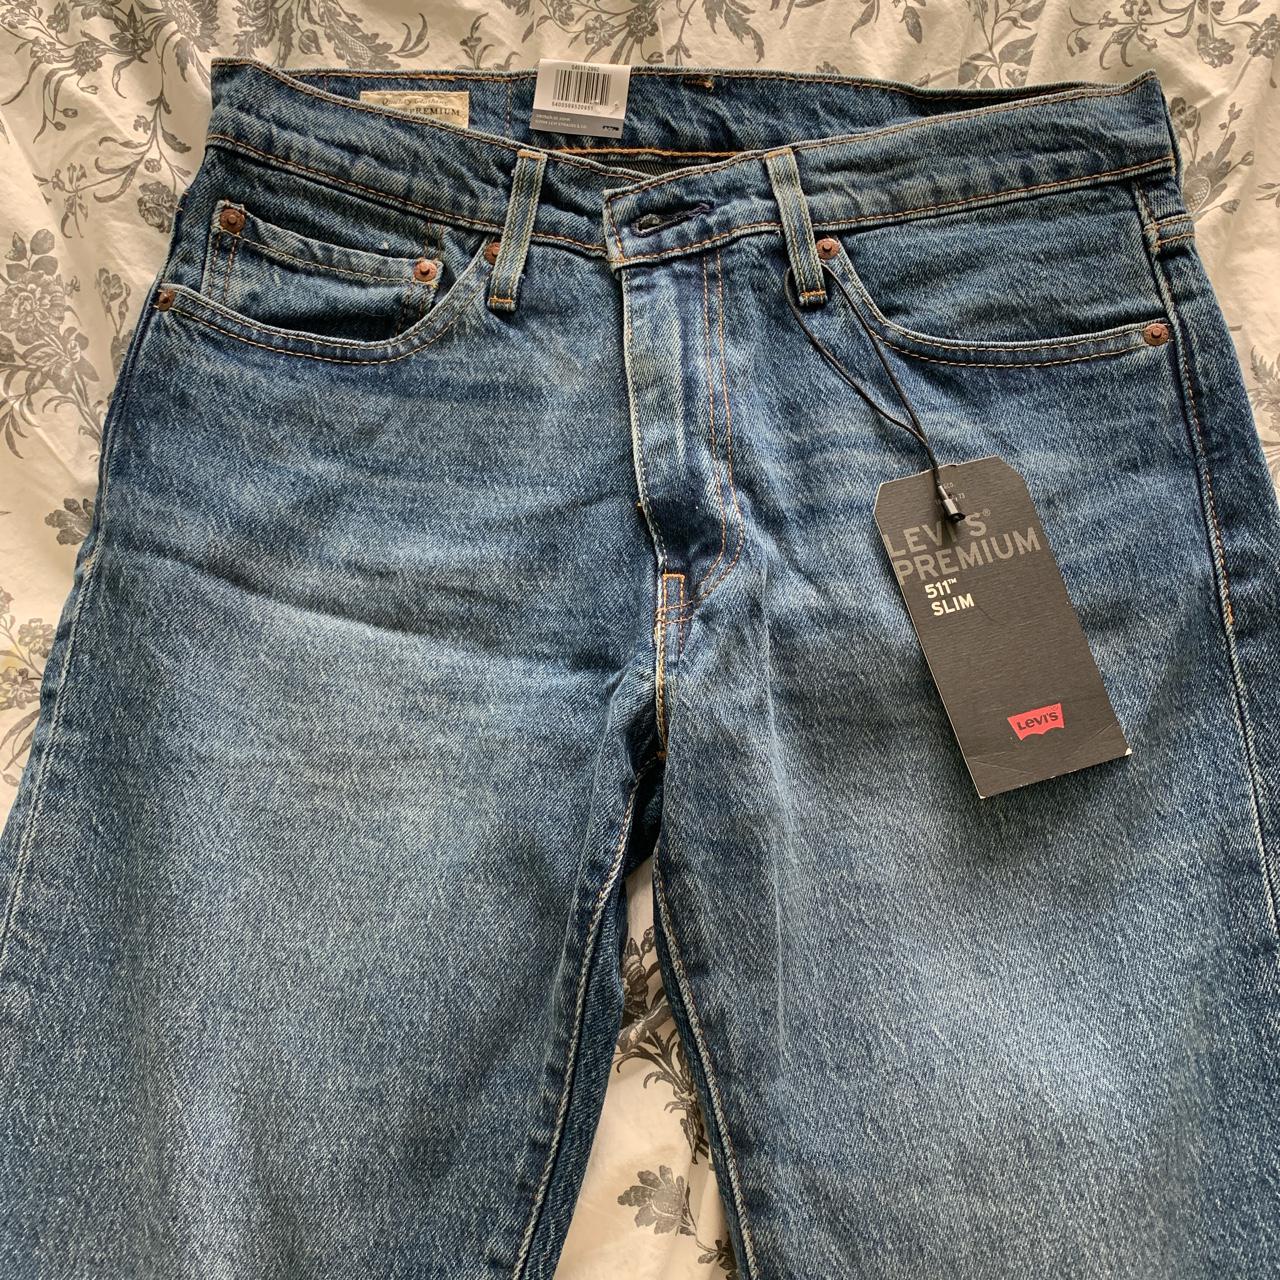 Brand New Levis Mens Jeans 511 Slim Size 30x32 Depop